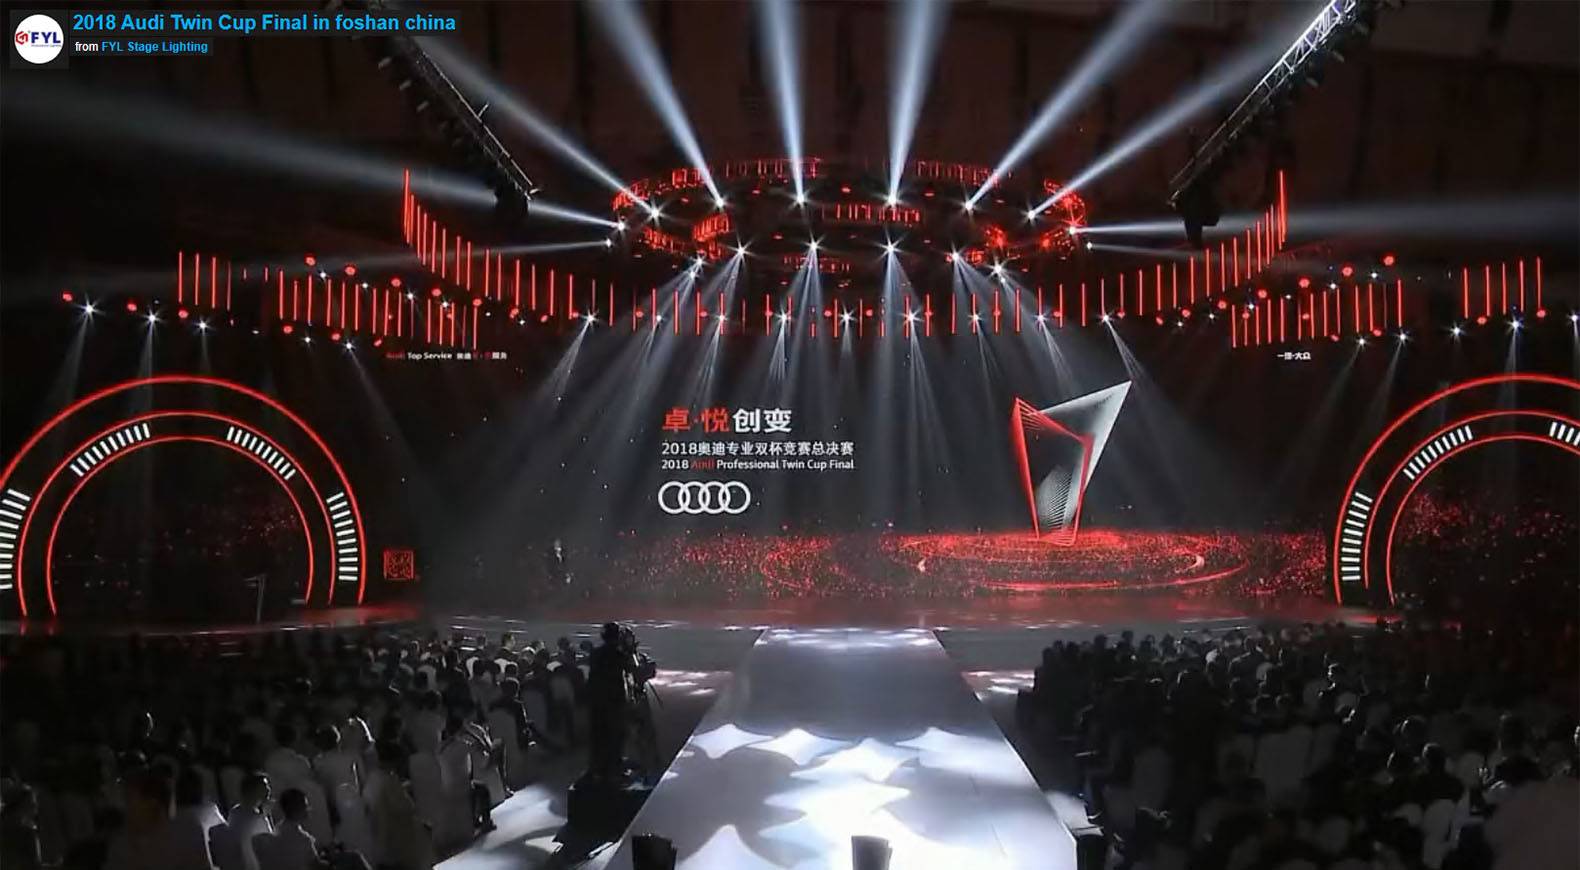 2018 Audi Twin Cup-ის ფინალი ფოშანში ჩინეთში